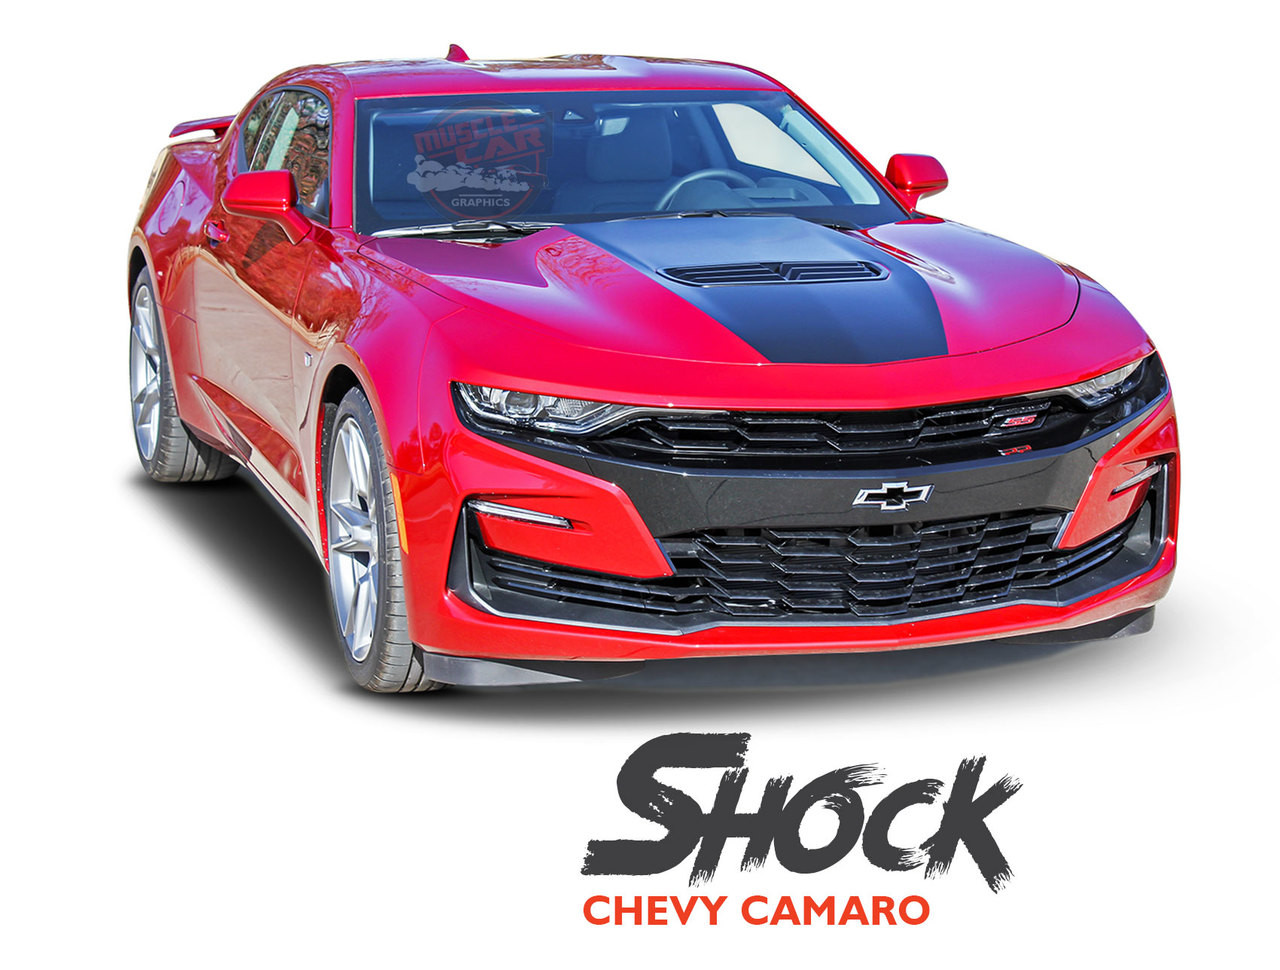 SHOCK, 2019 Camaro Stinger Hood Decal, Camaro Stripes, Vinyl Graphics